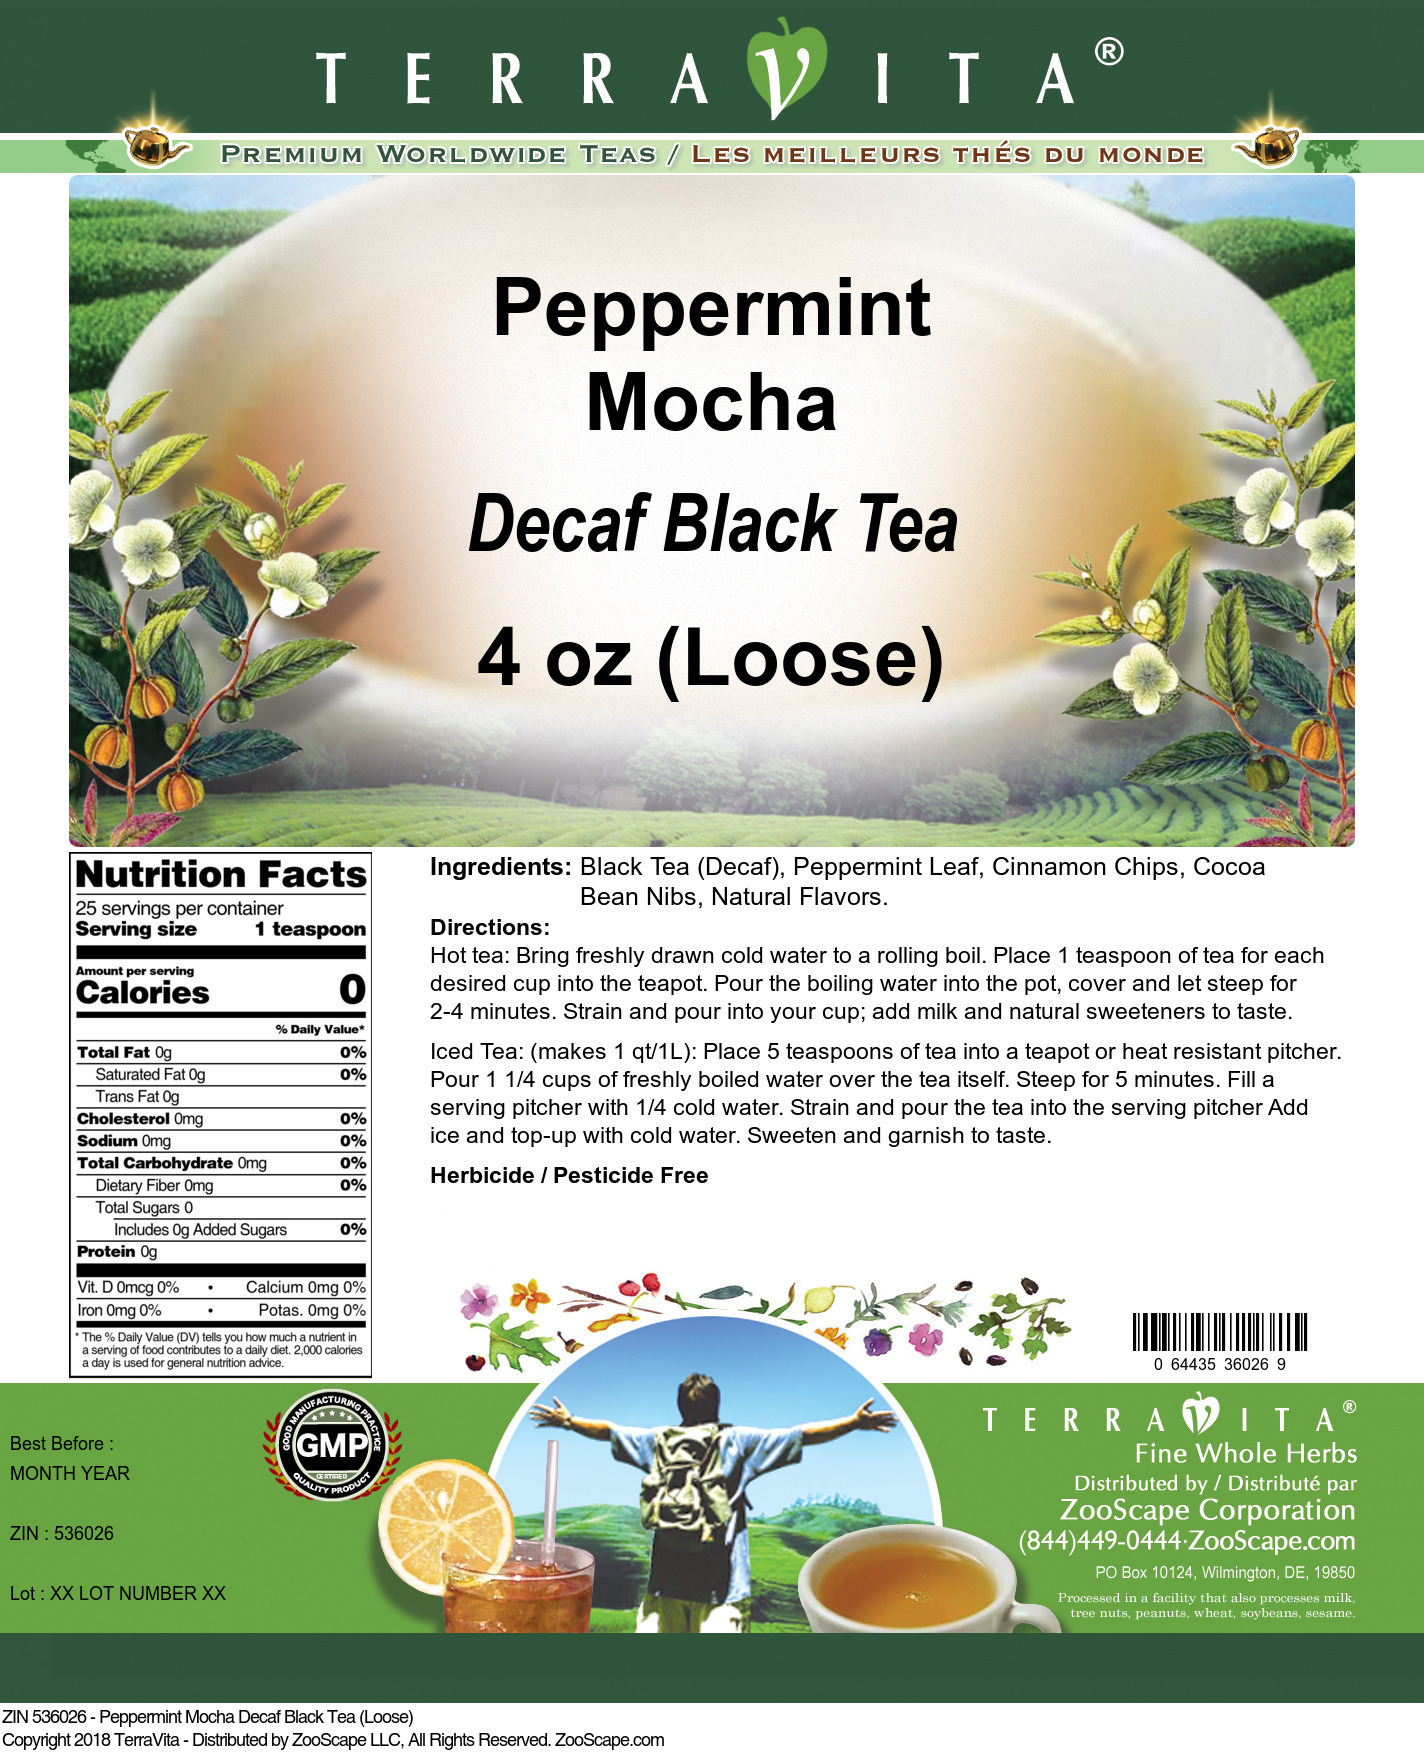 Peppermint Mocha Decaf Black Tea (Loose) - Label